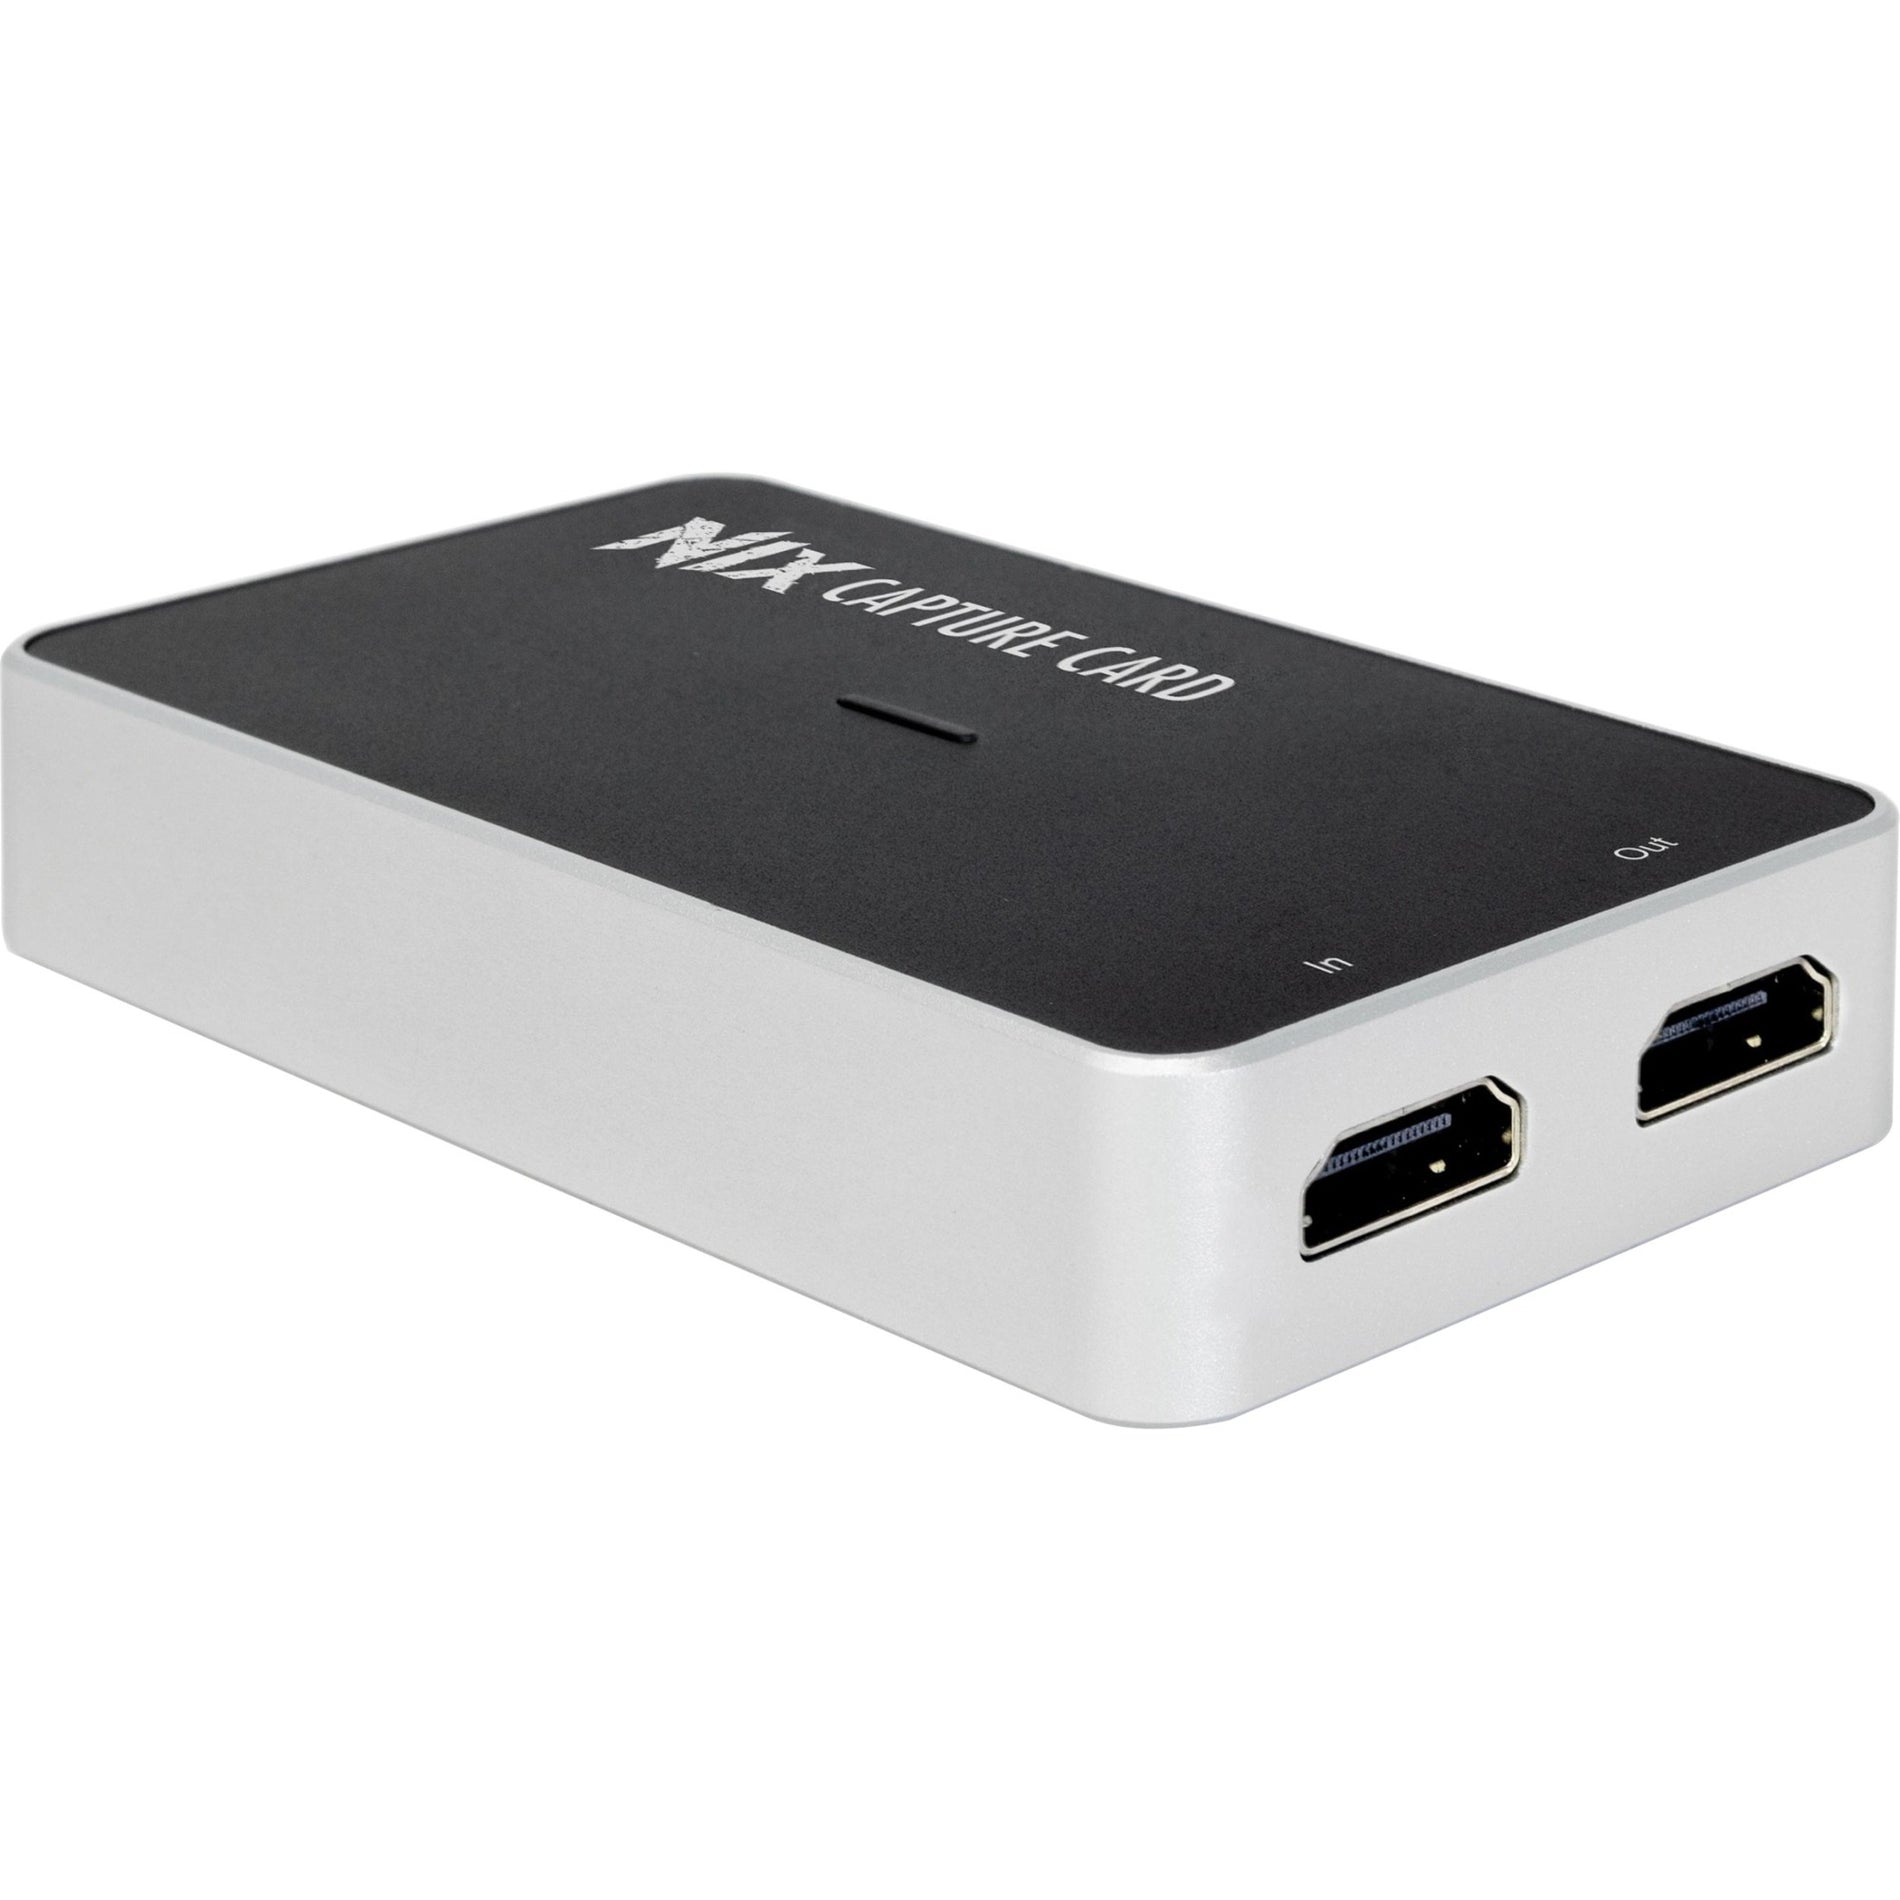 Plugable USBC-CAP60 Performance NIX Video Game Capture Card 1080P 60FPS, USB C & USB 3.0, HDMI